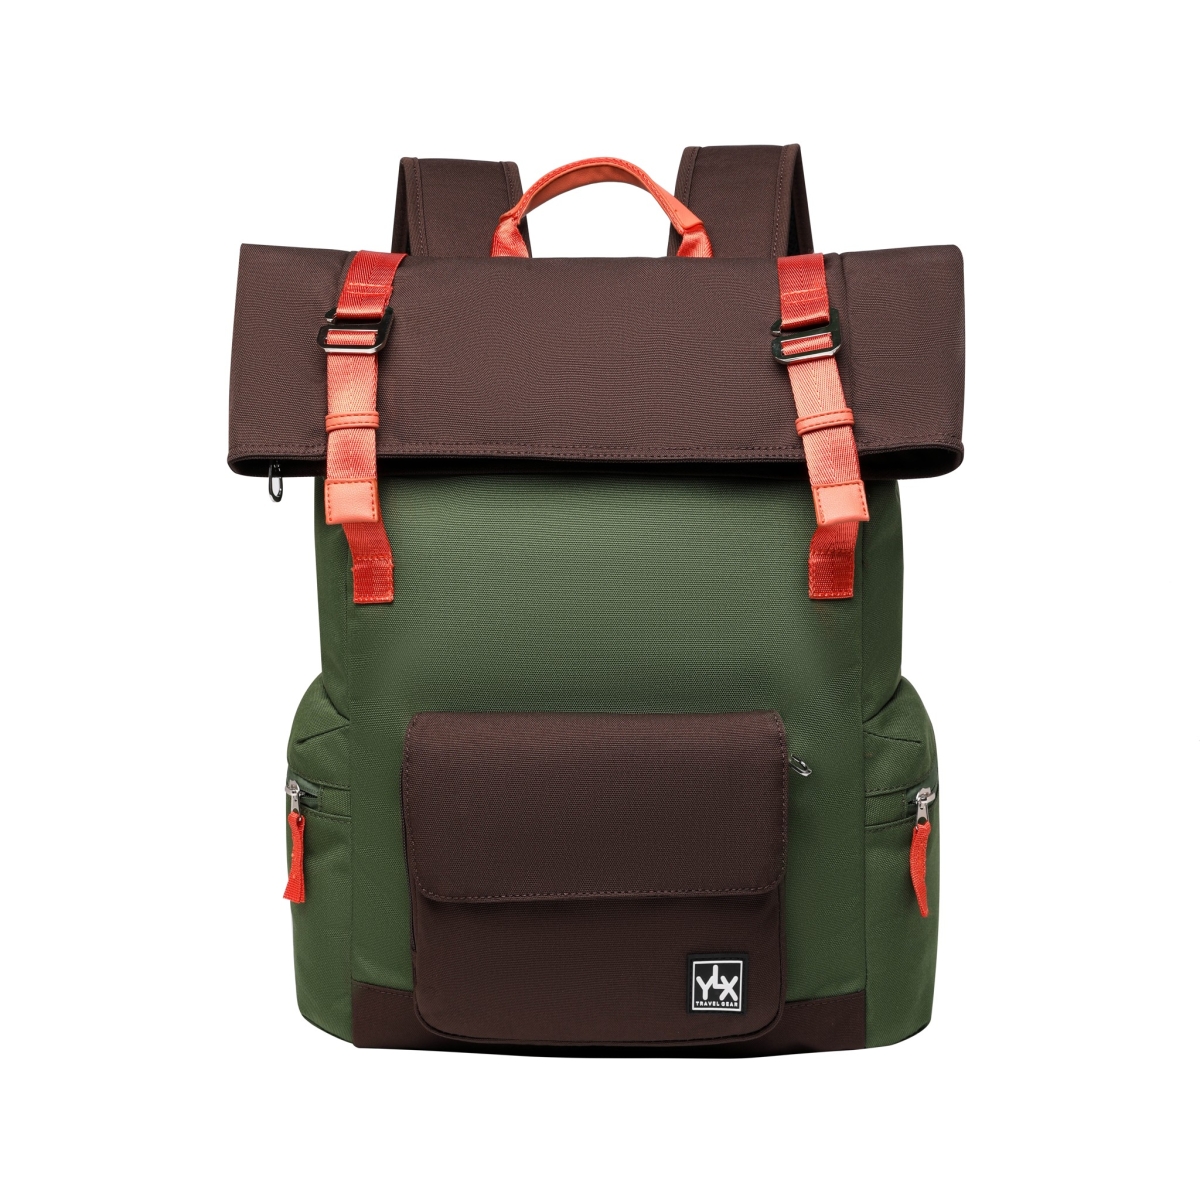 YLX Original Backpack 2.0 | Army Green & Dark Brown